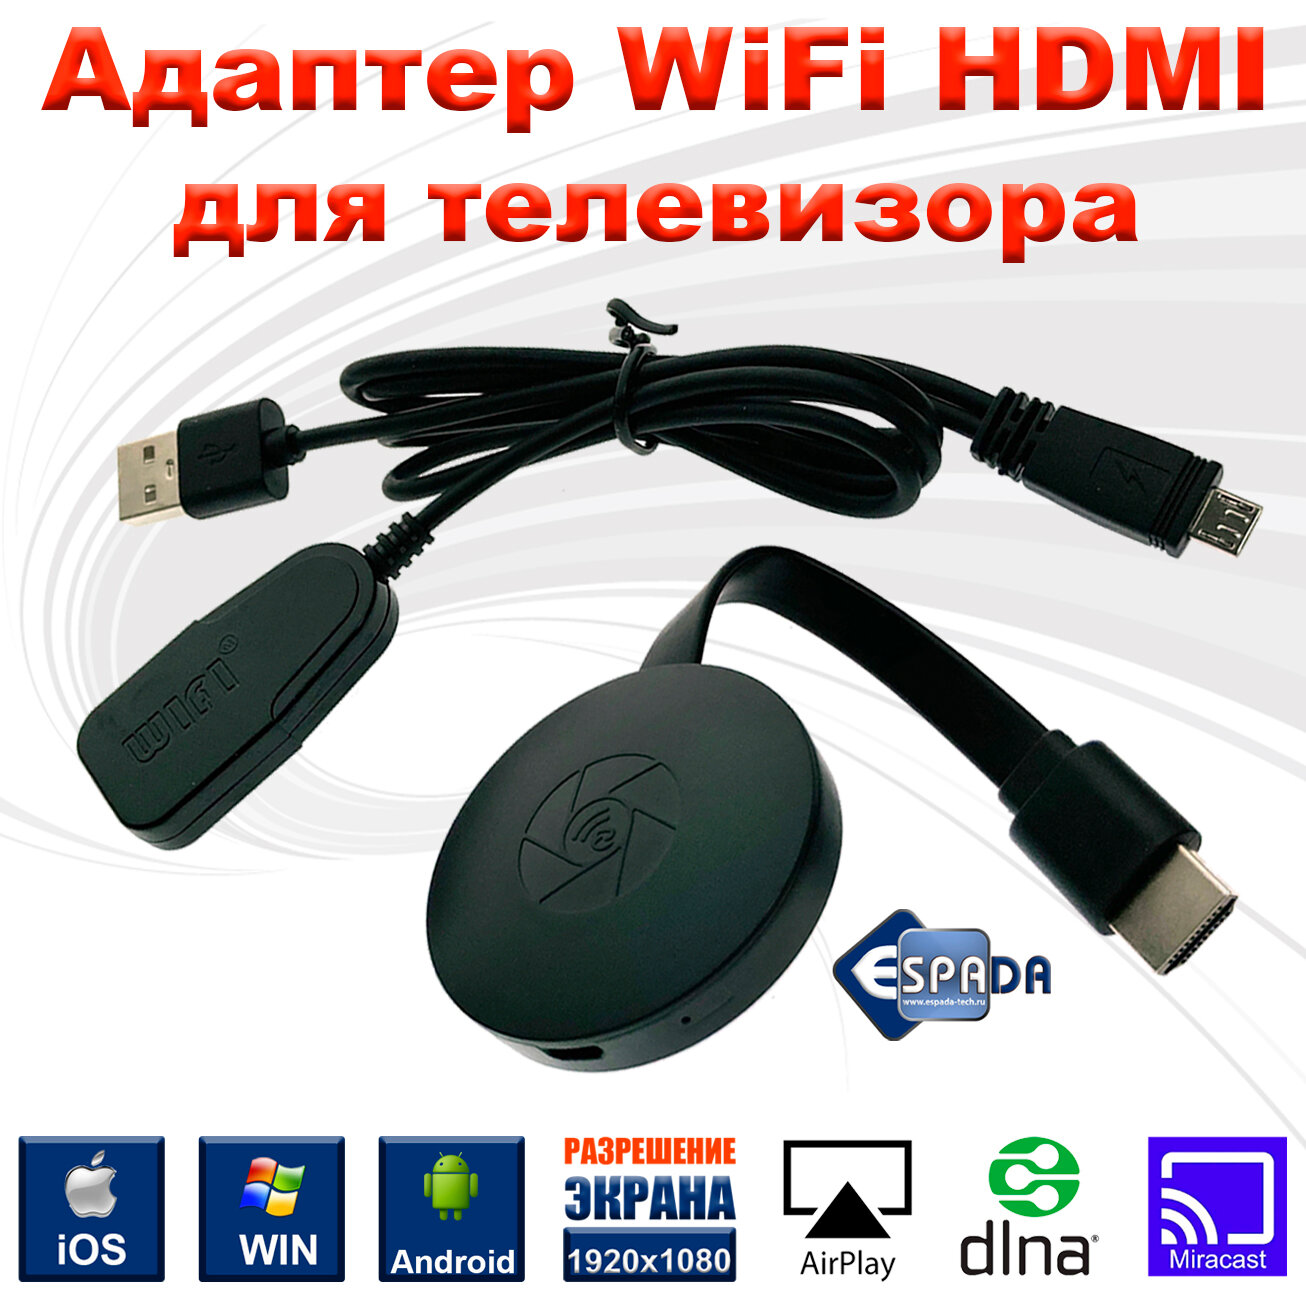 Espada WiFi HDMI Adapter WV04